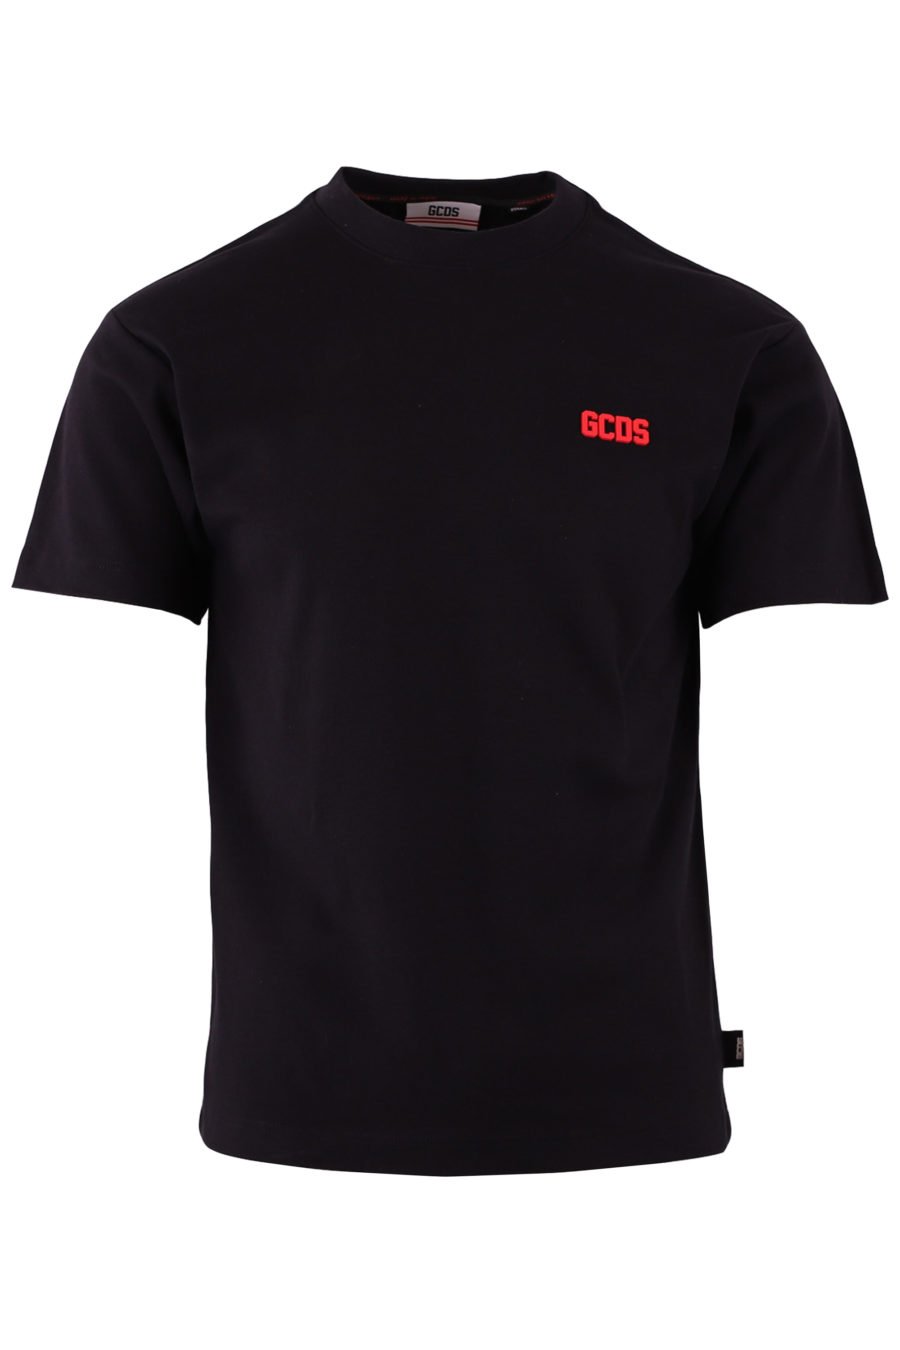 Black T-shirt with small red logo - 543367961929d01cca0f1a67b35b61b1de57be27